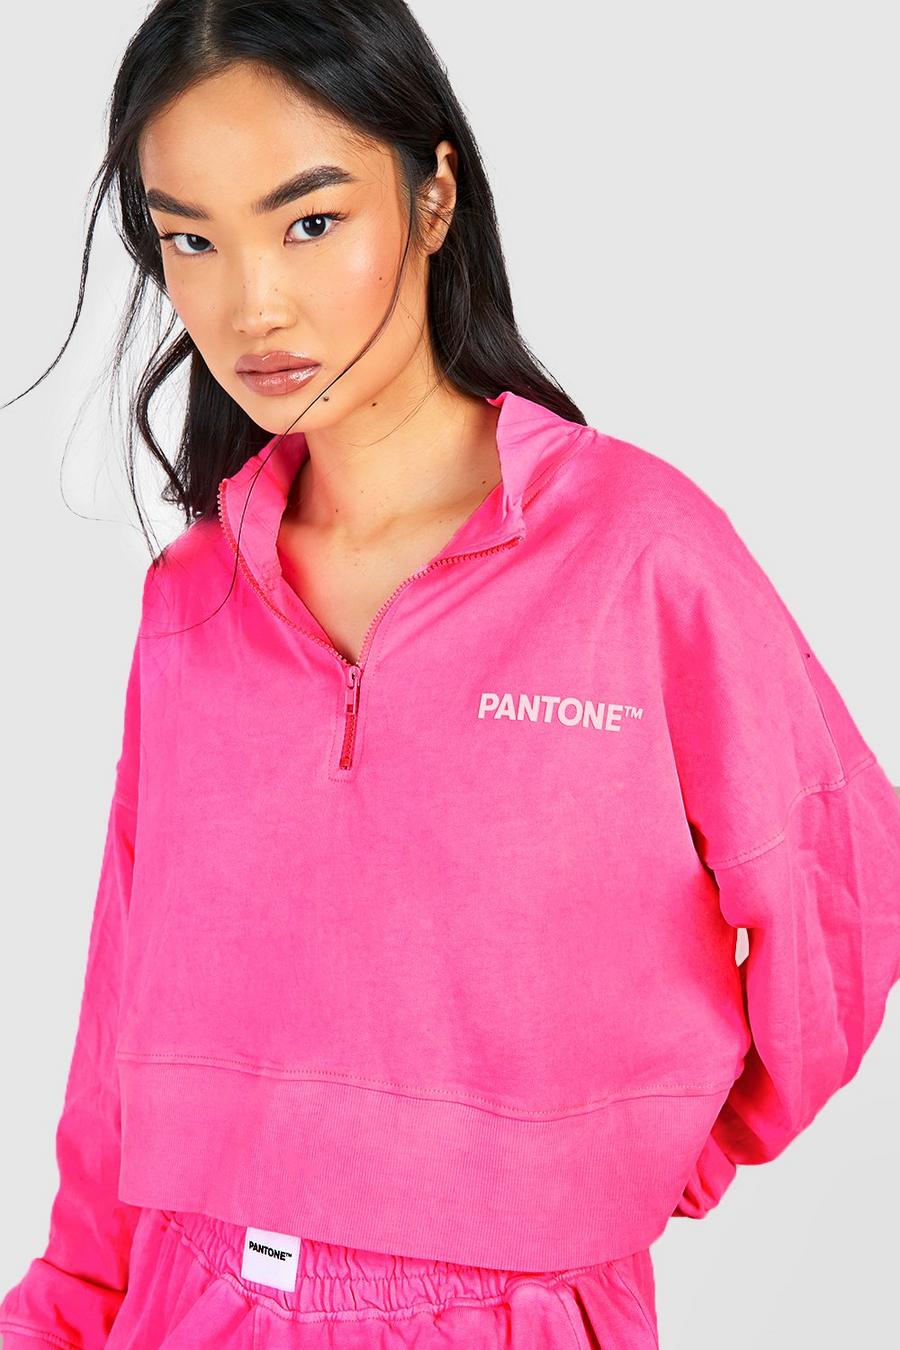 Pantone kastiges Sweatshirt mit halbem Reißverschluss, Neon-pink rose